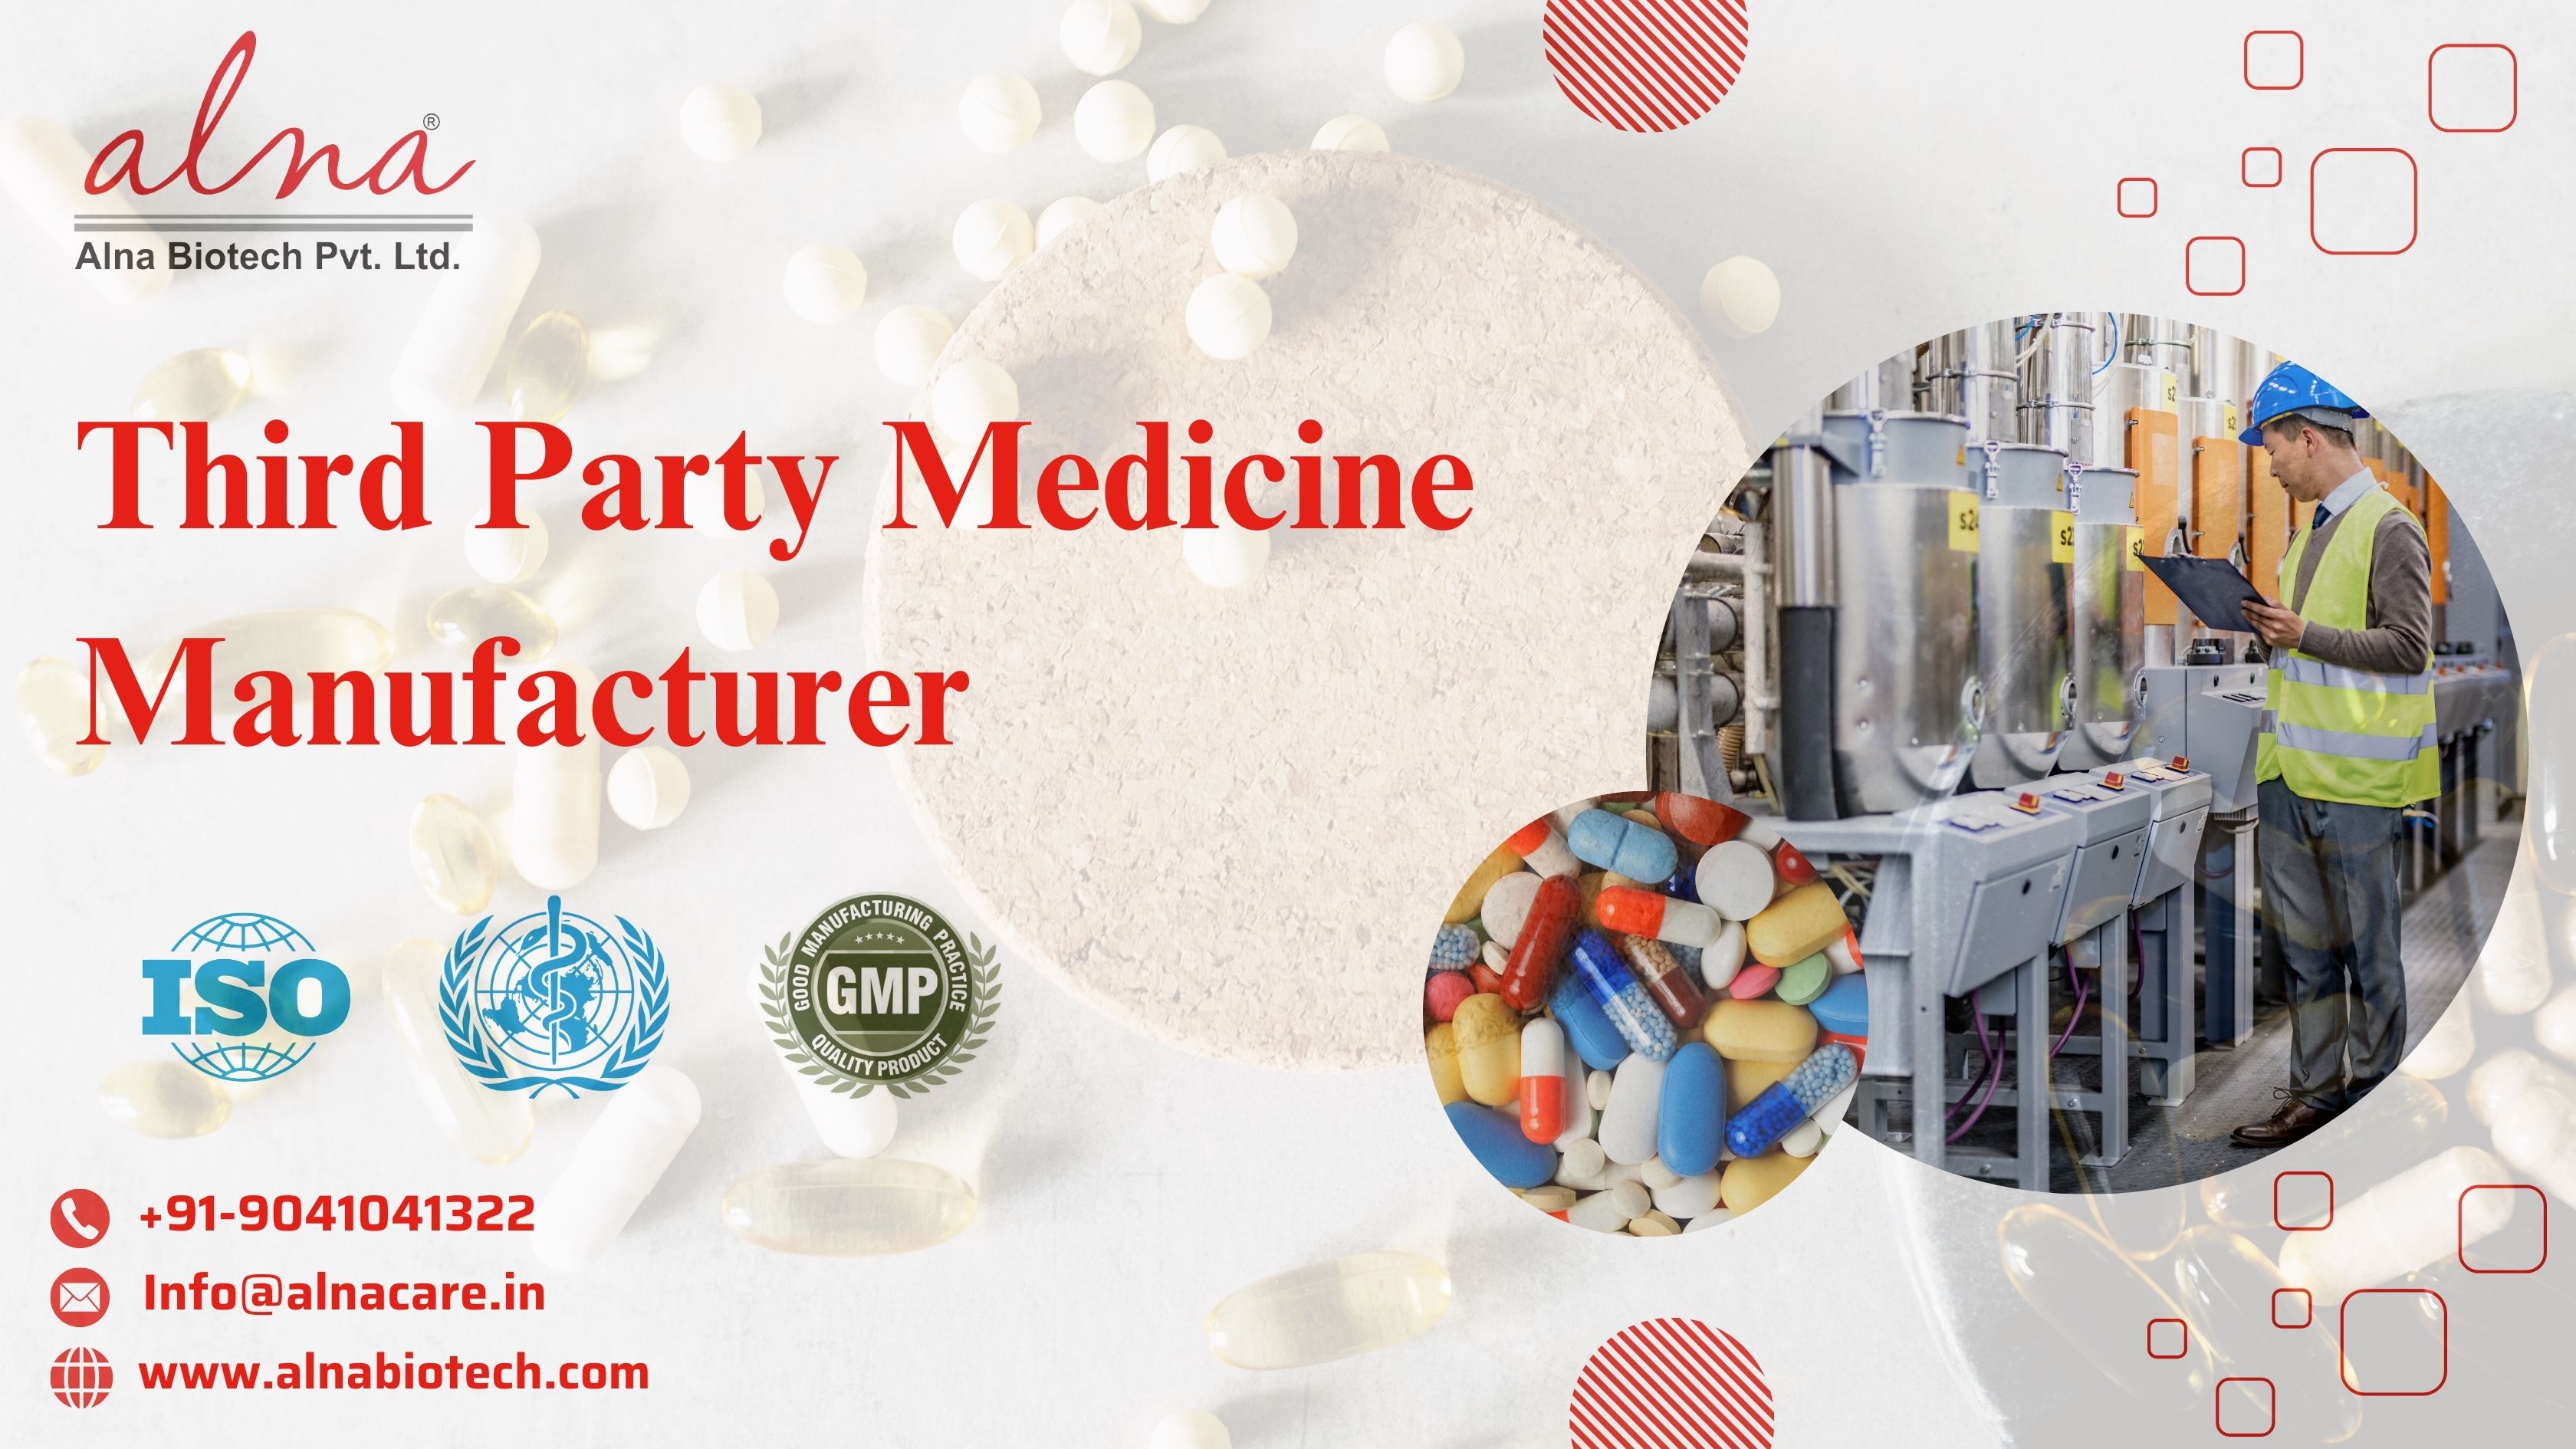 Alna biotech | Third Party Medicine Manufacturer in India